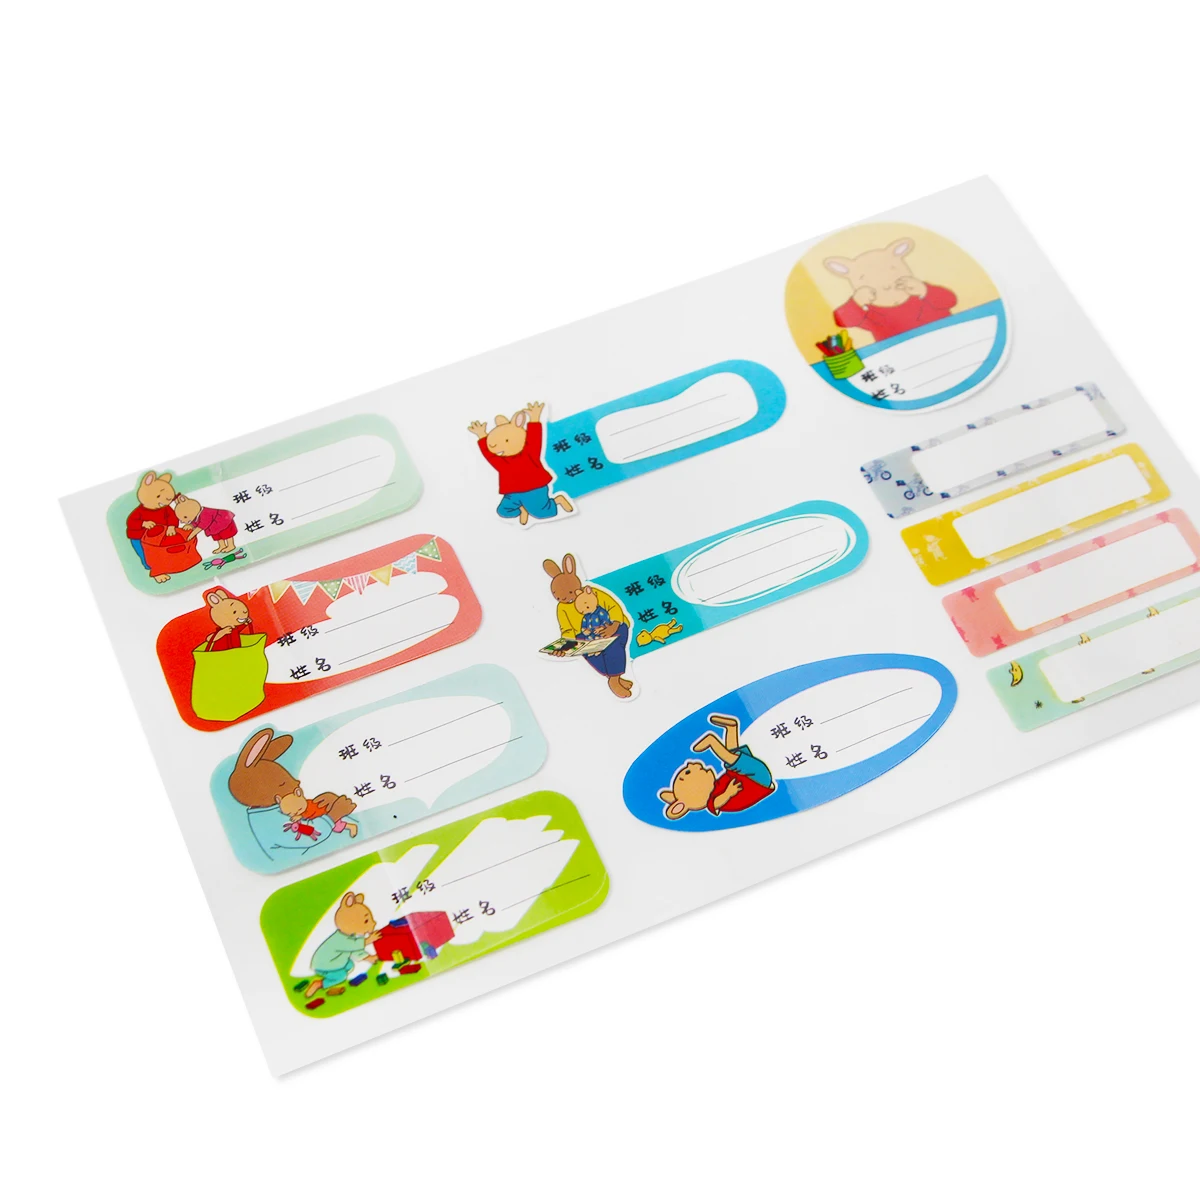 Custom Name Tag clipart templates blank vinyl DECO stickers, school kids decoration planner paper writable sticker sheet